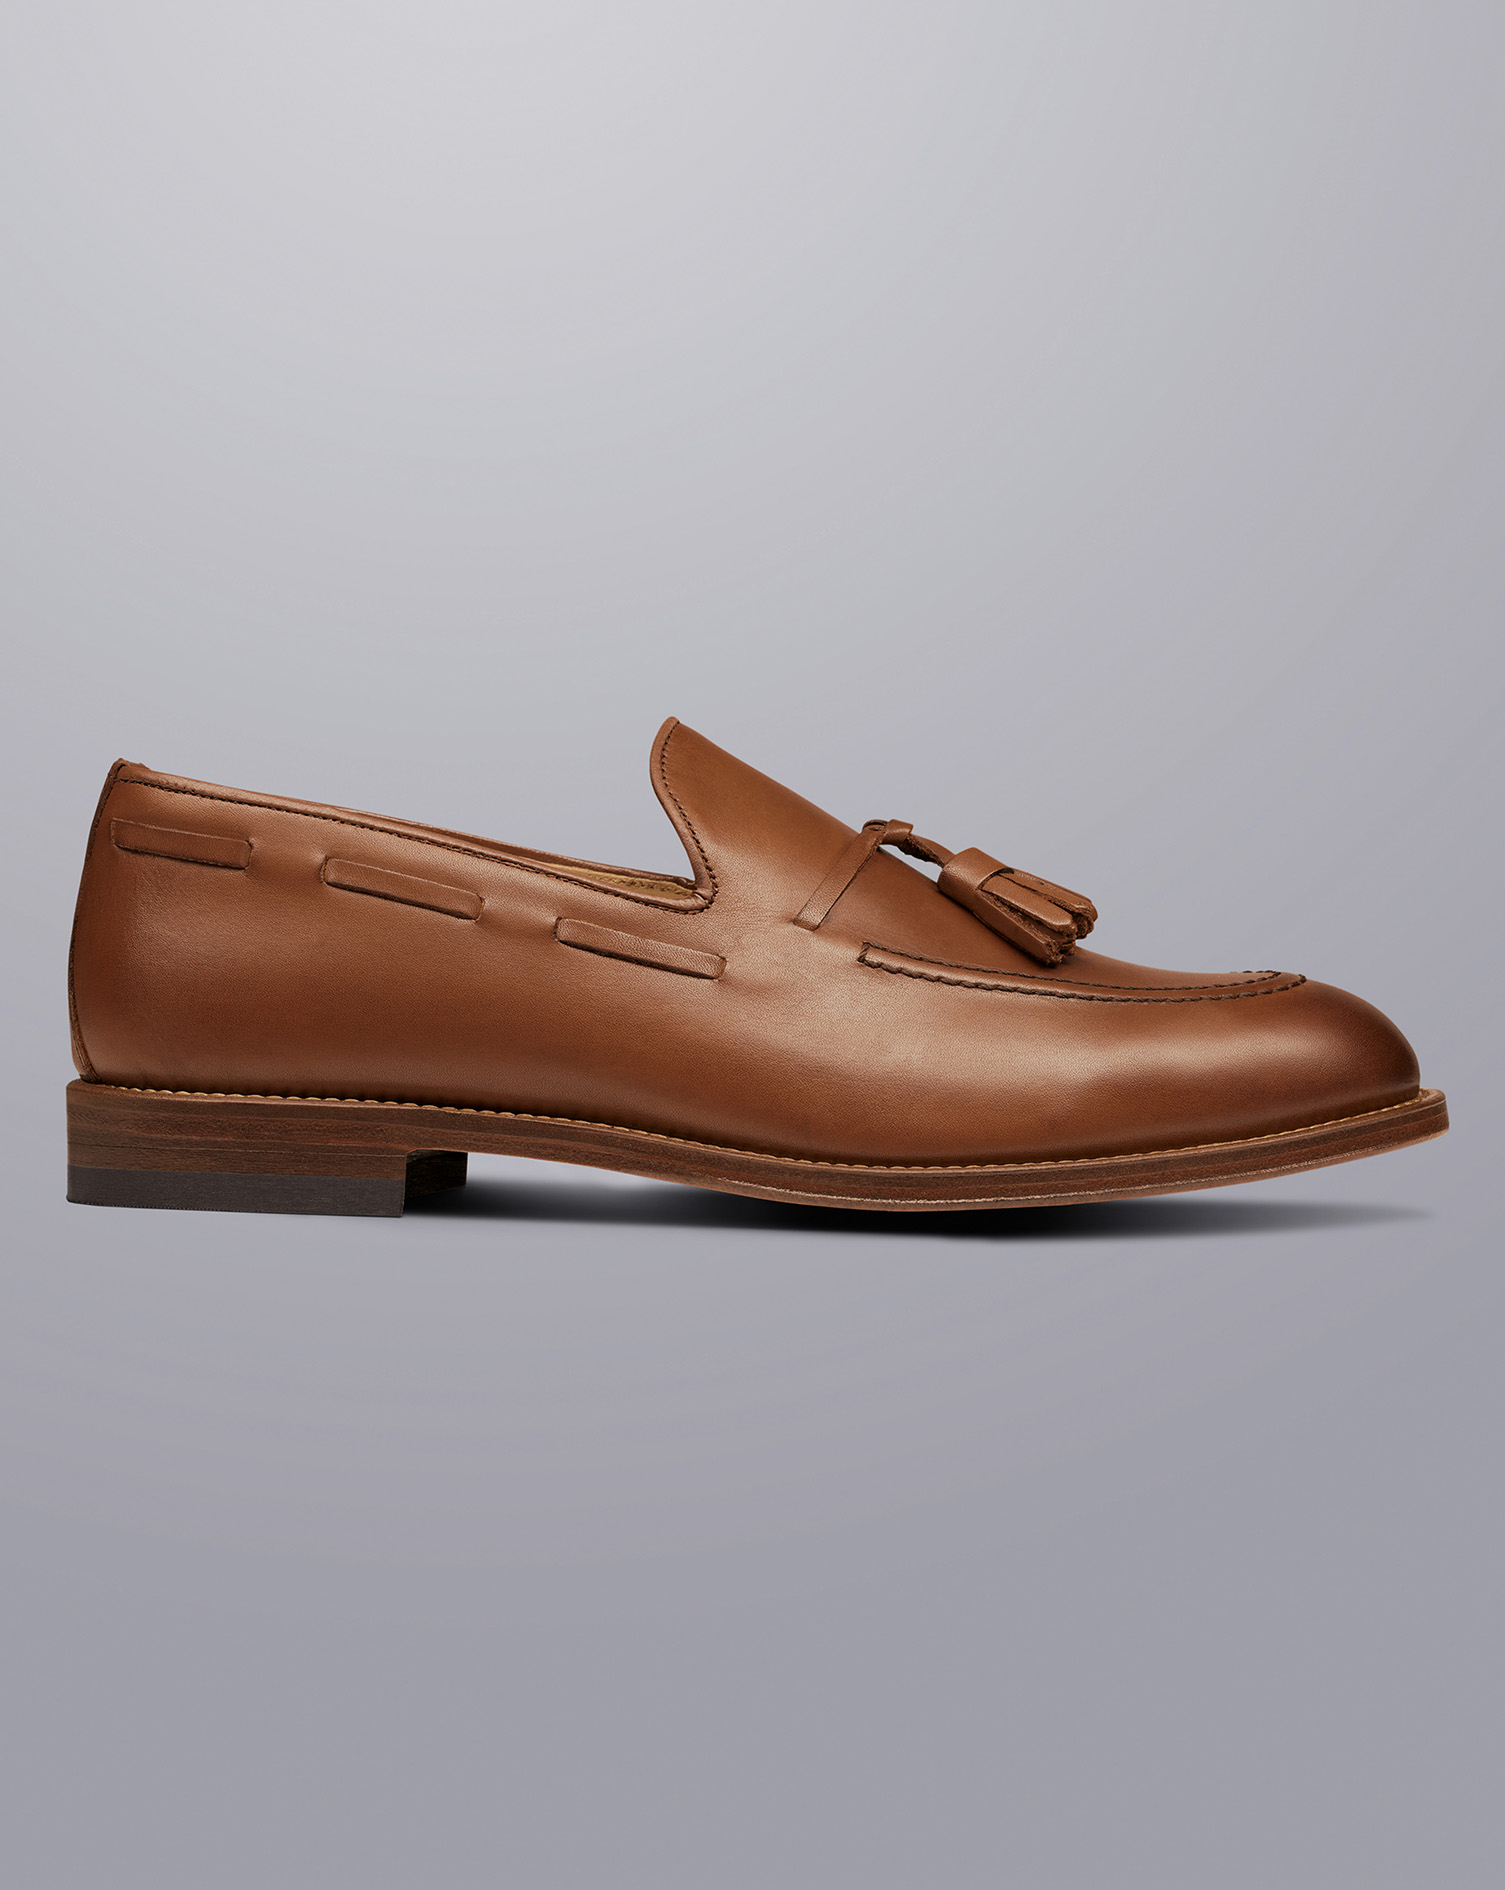 Men's Charles Tyrwhitt Leather Tassel Loafers - Walnut Brown Size 9
